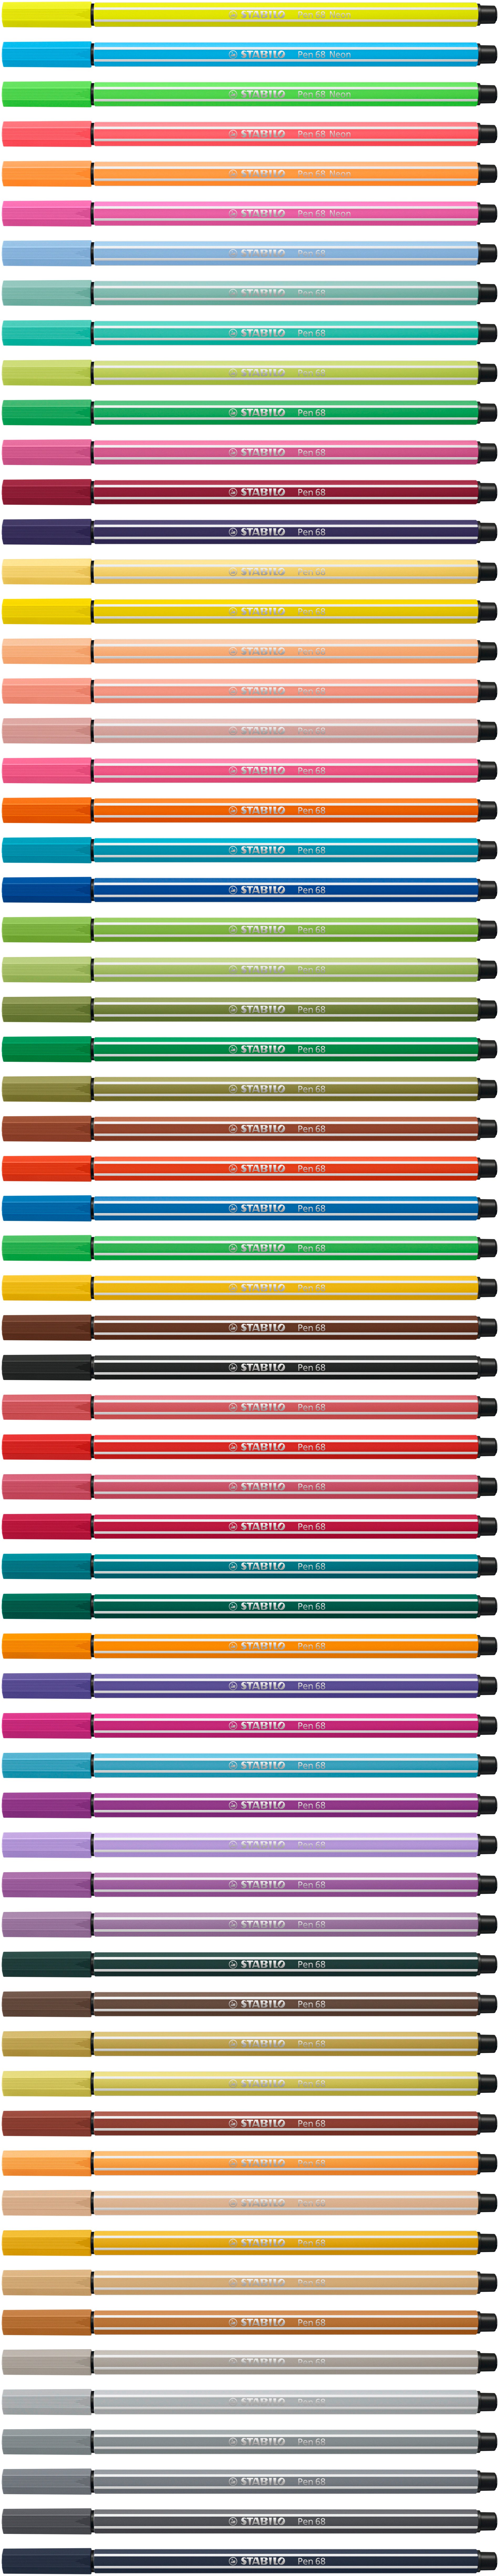 STABILO Pen 68 Fine-Tip Markers, Color Parade Set of 20 – St. Louis Art  Supply